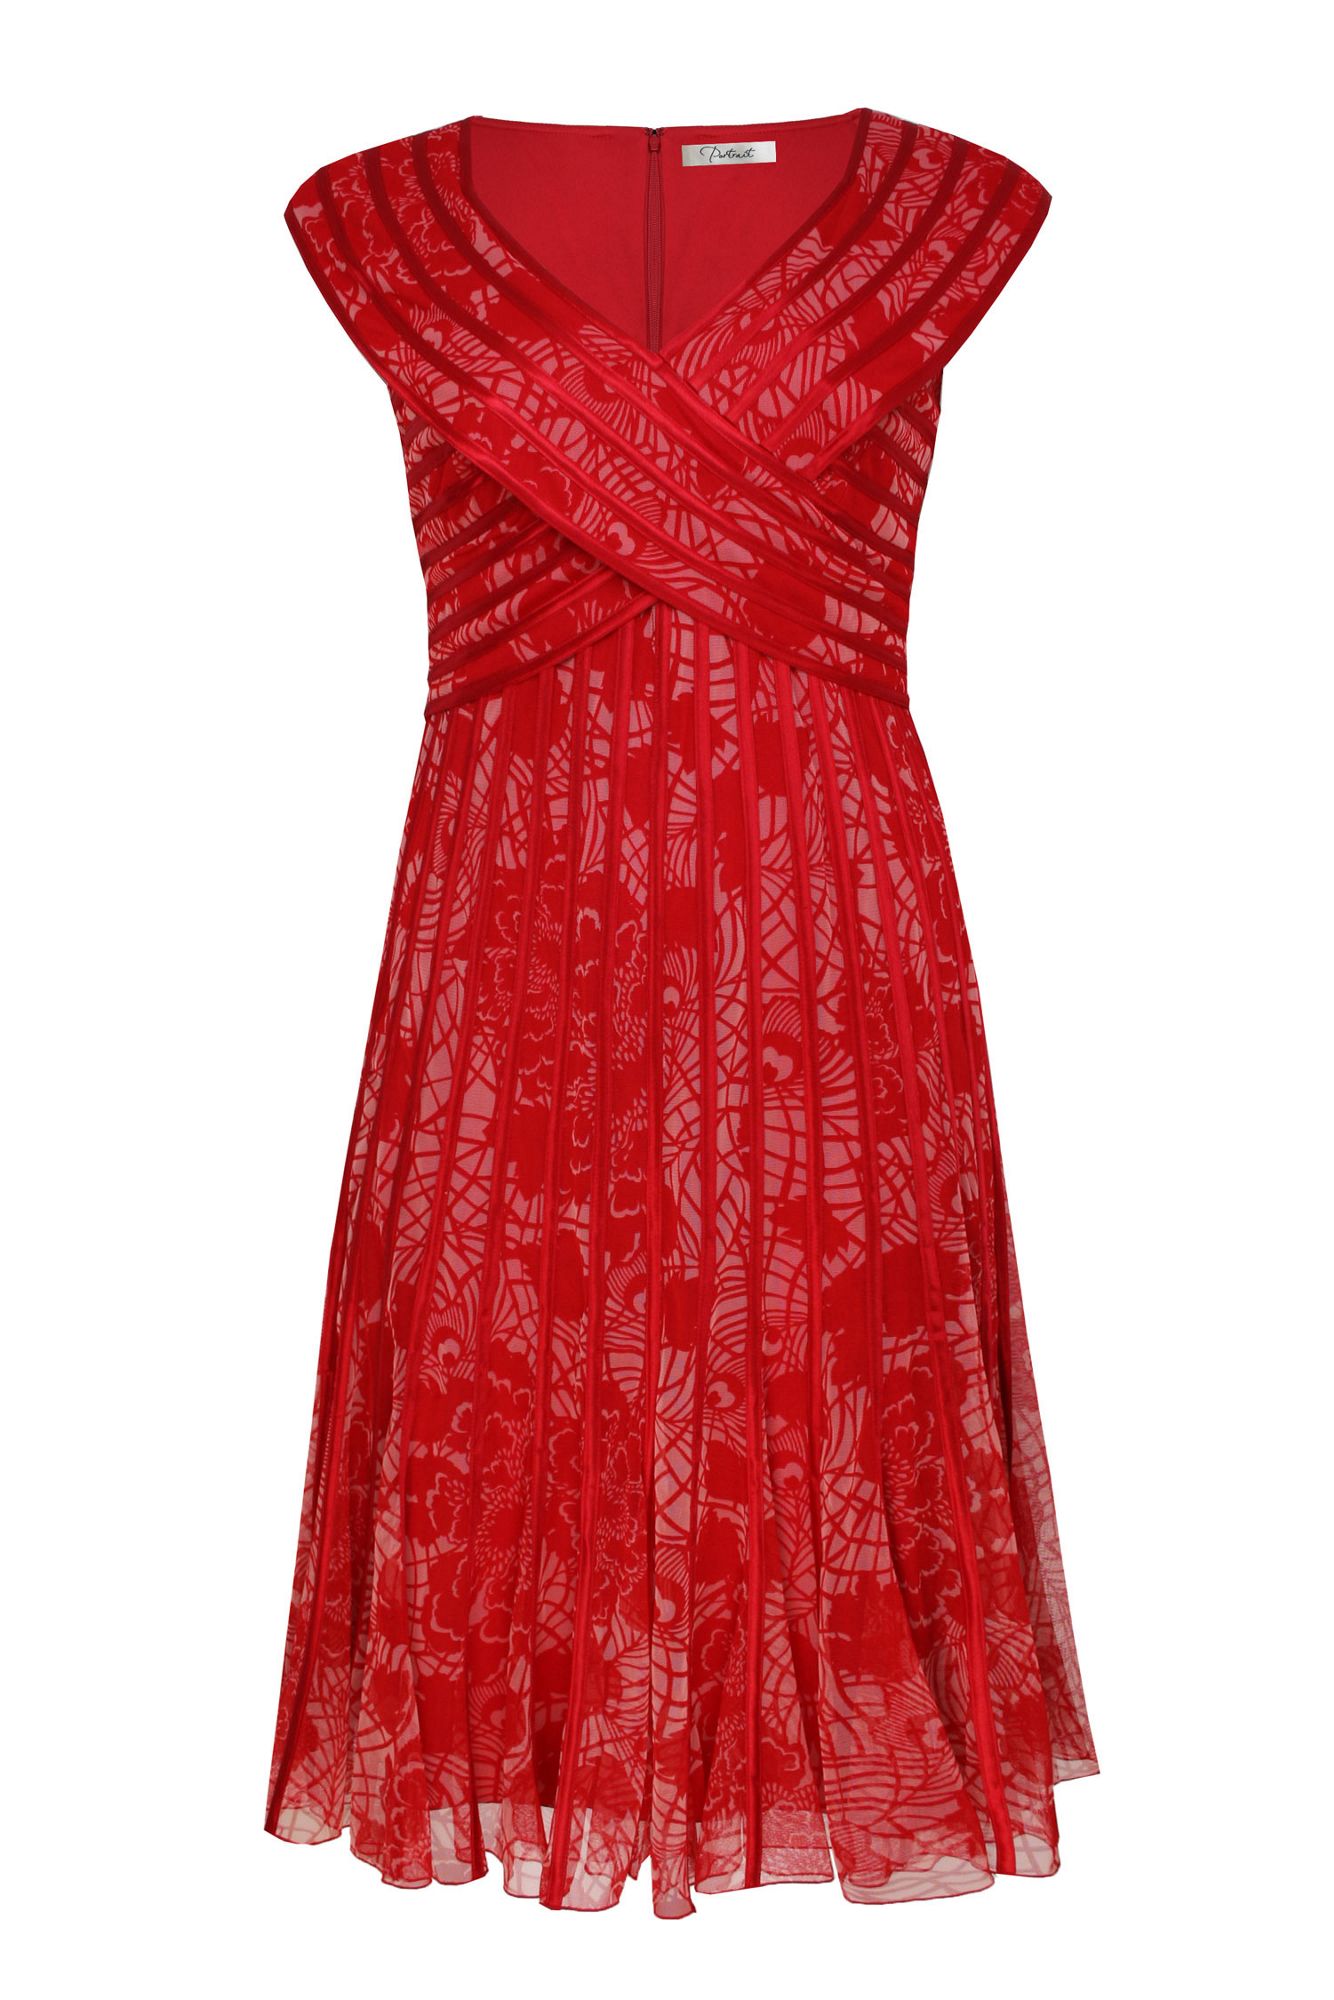 Ann Harvey Red Oriental Satin Stripe Dress in Red | Lyst